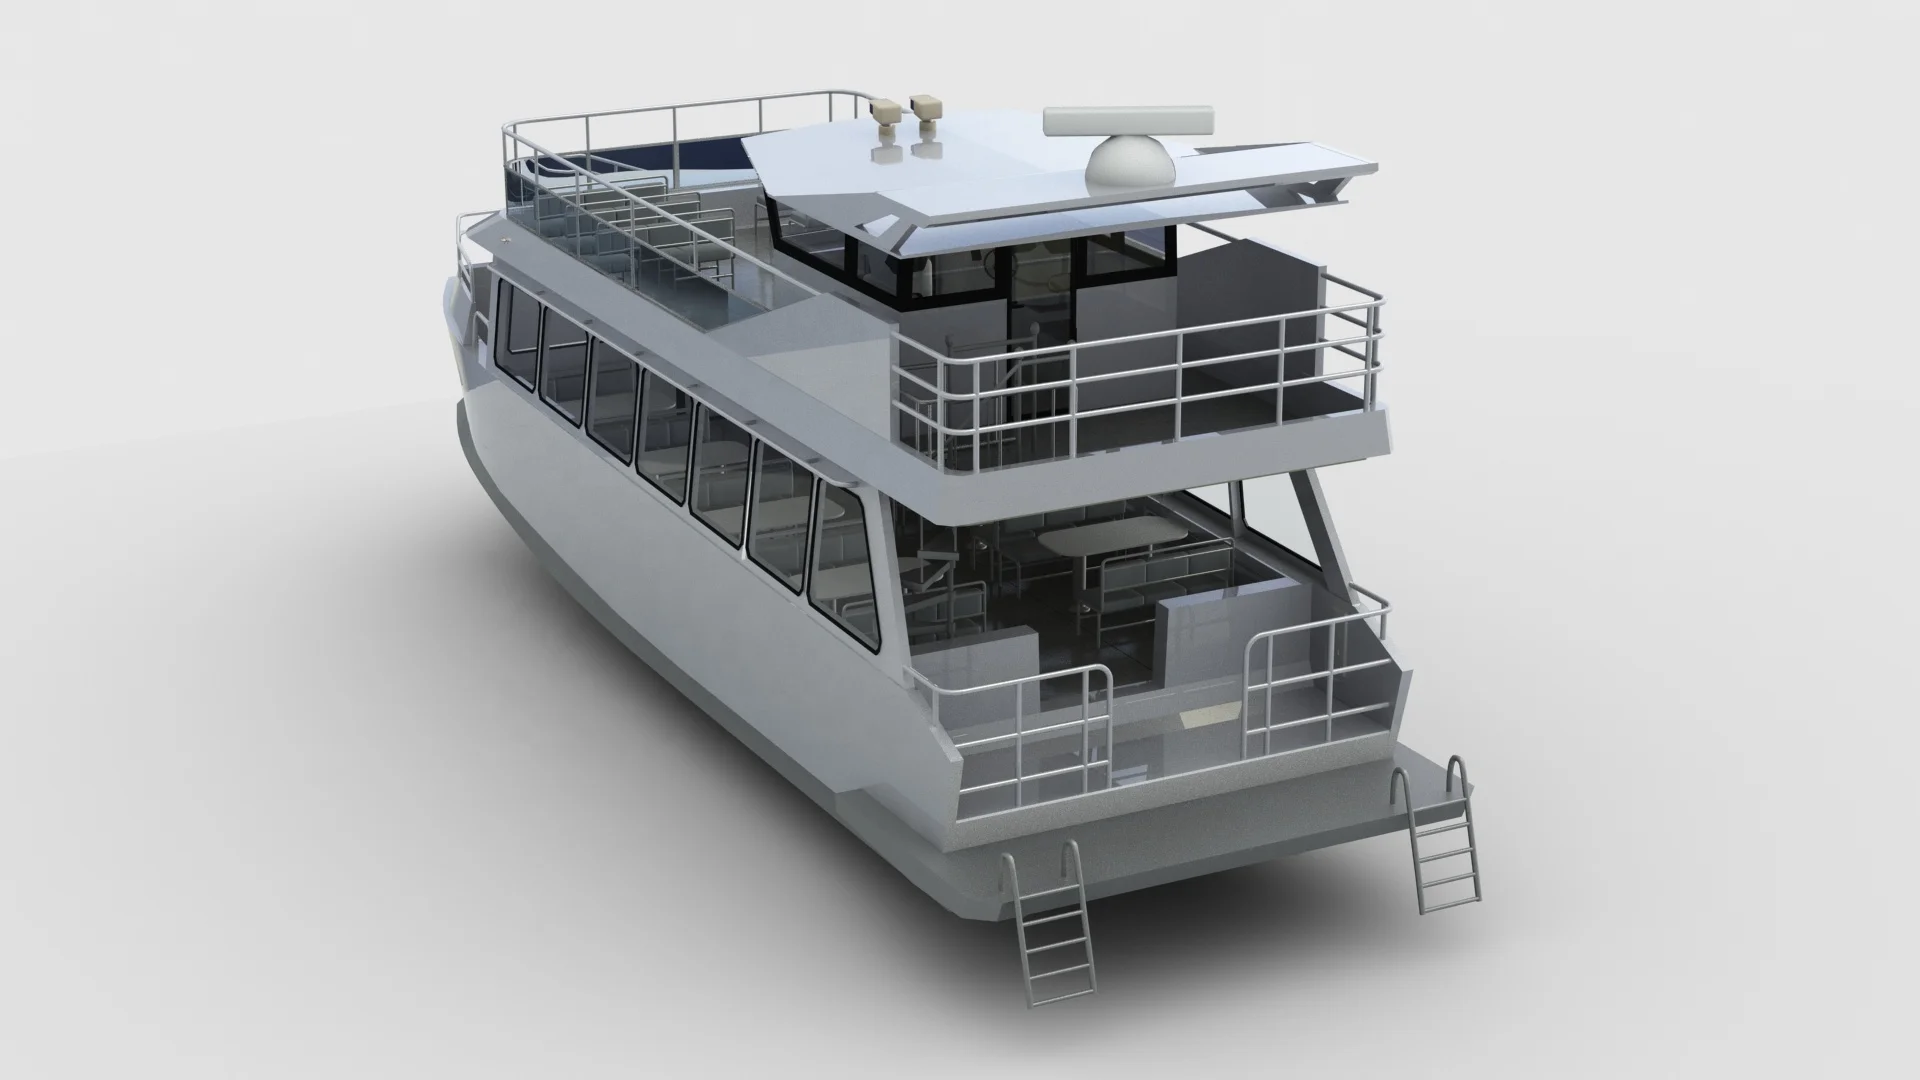 15m luxury double-decker aluminium catamaran passenger boat twin hull safety tourist ship